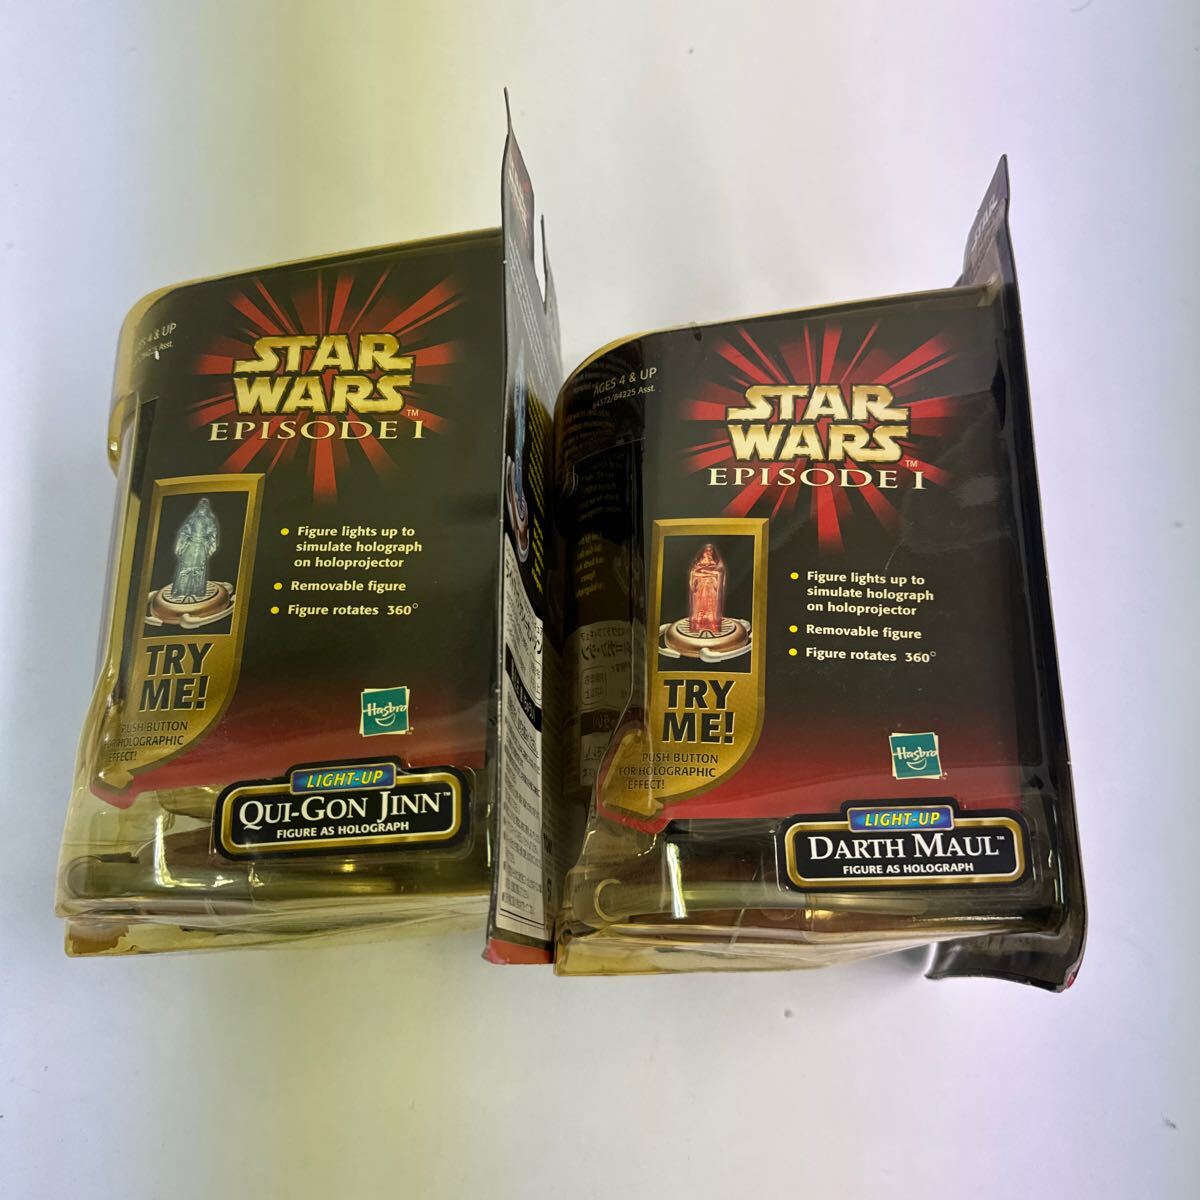  Звездные войны STAR WARS Darth Maul gwaigasin тент грамм фигурка 2 шт. комплект включая доставку 